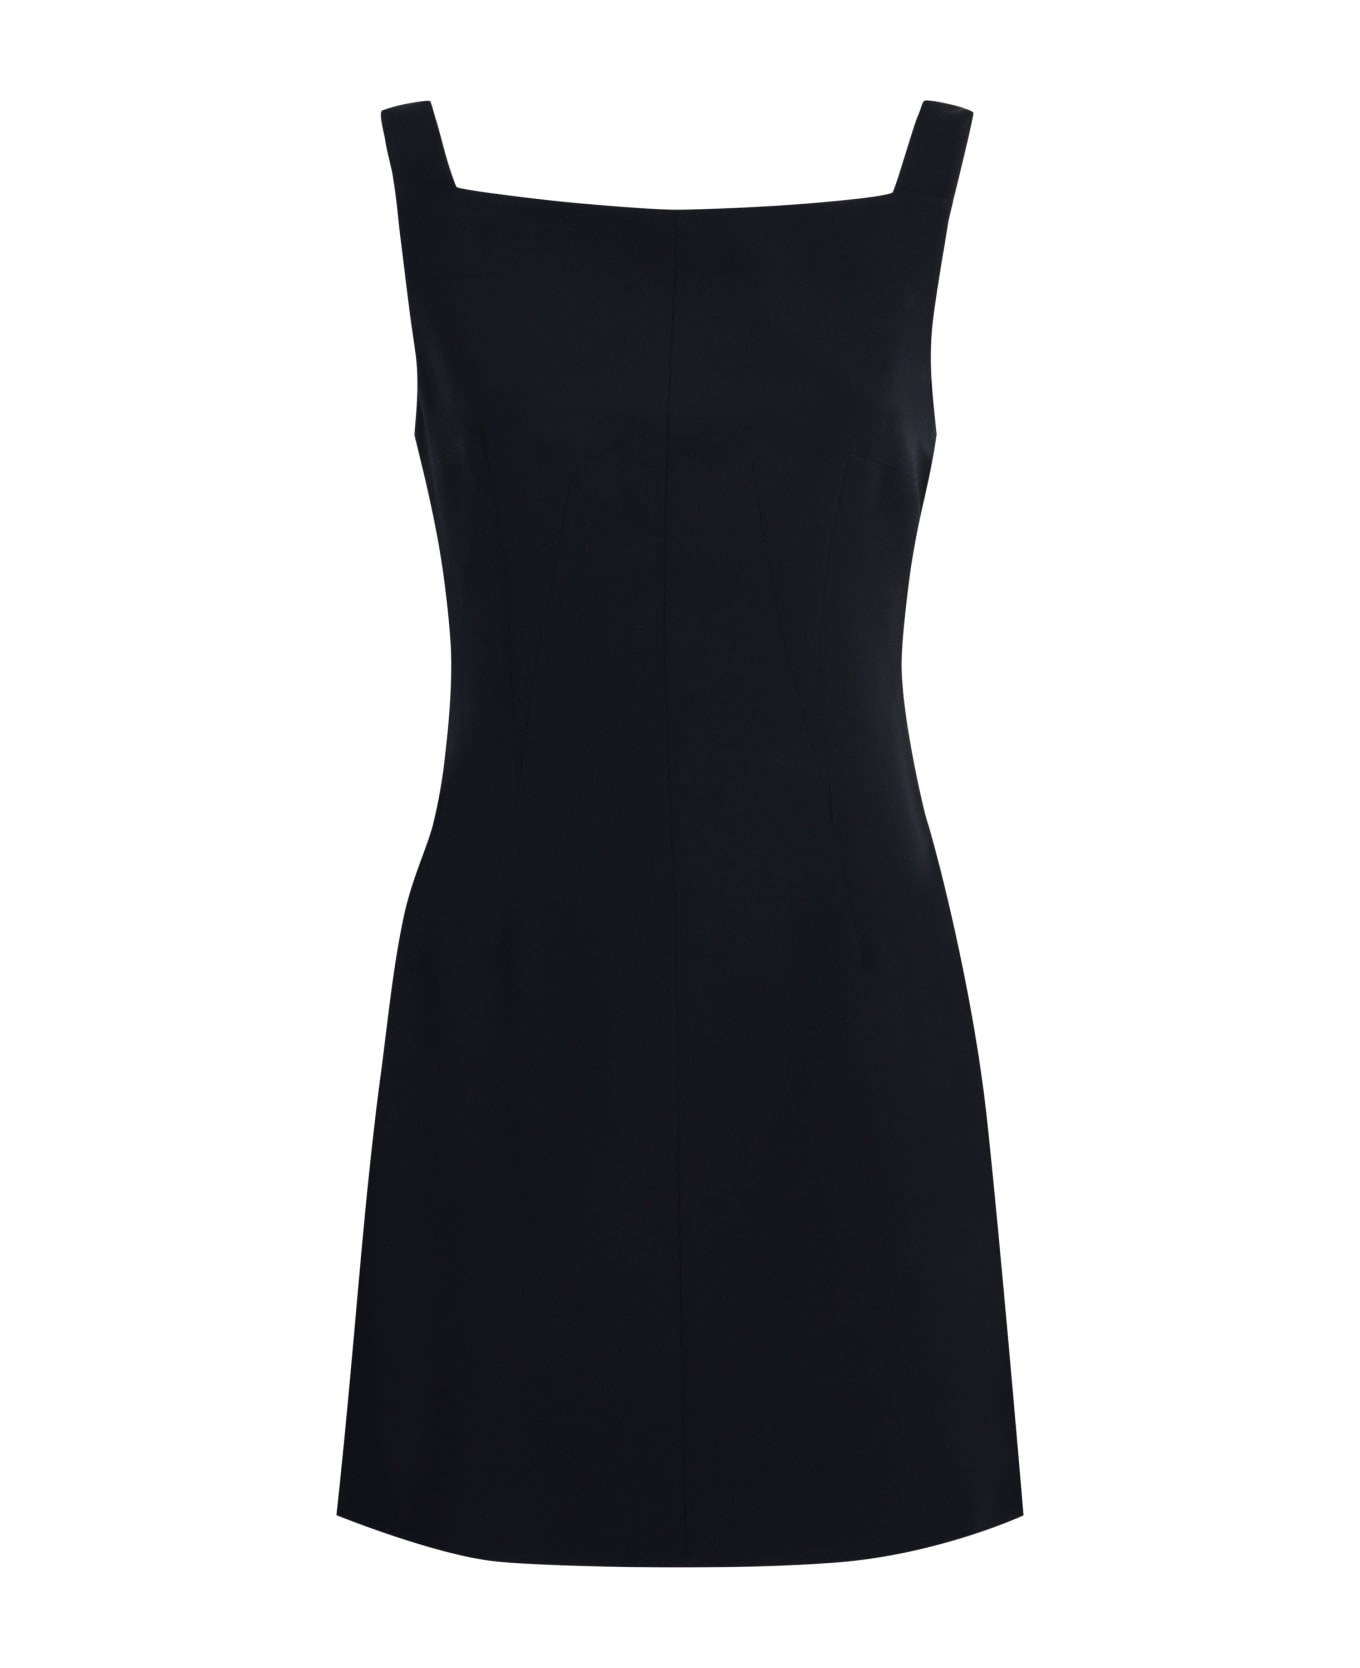 Givenchy Crepe Dress - black